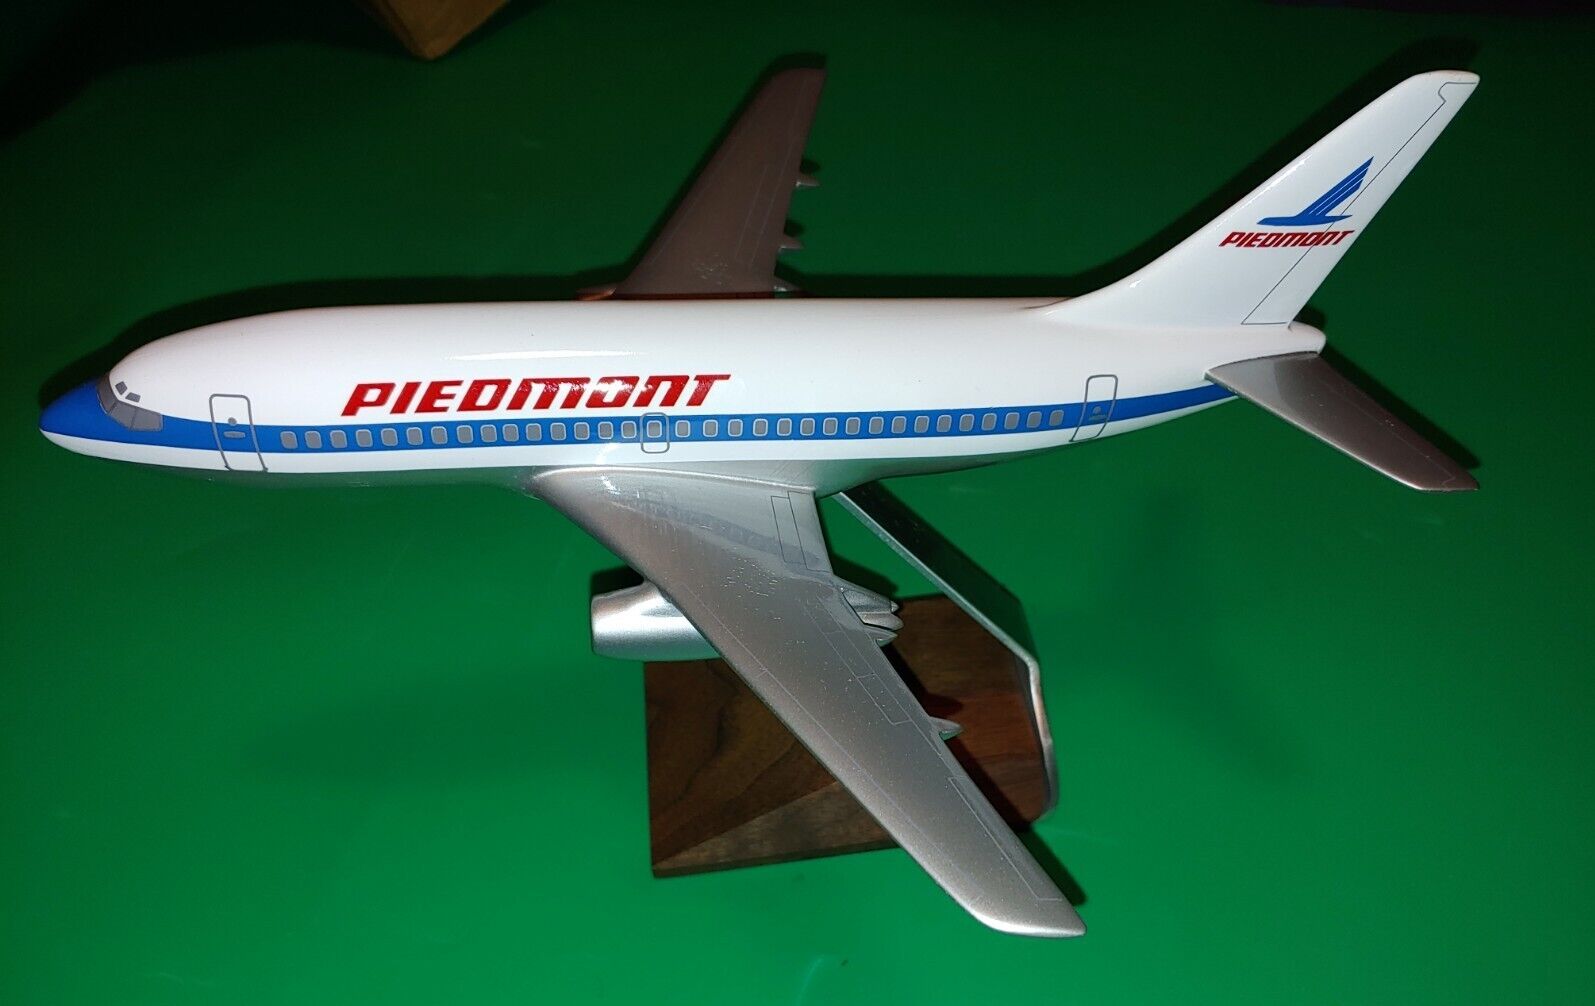 Piedmont Airlines Model Airplane Wesco models Airlines Desk Vintage Model